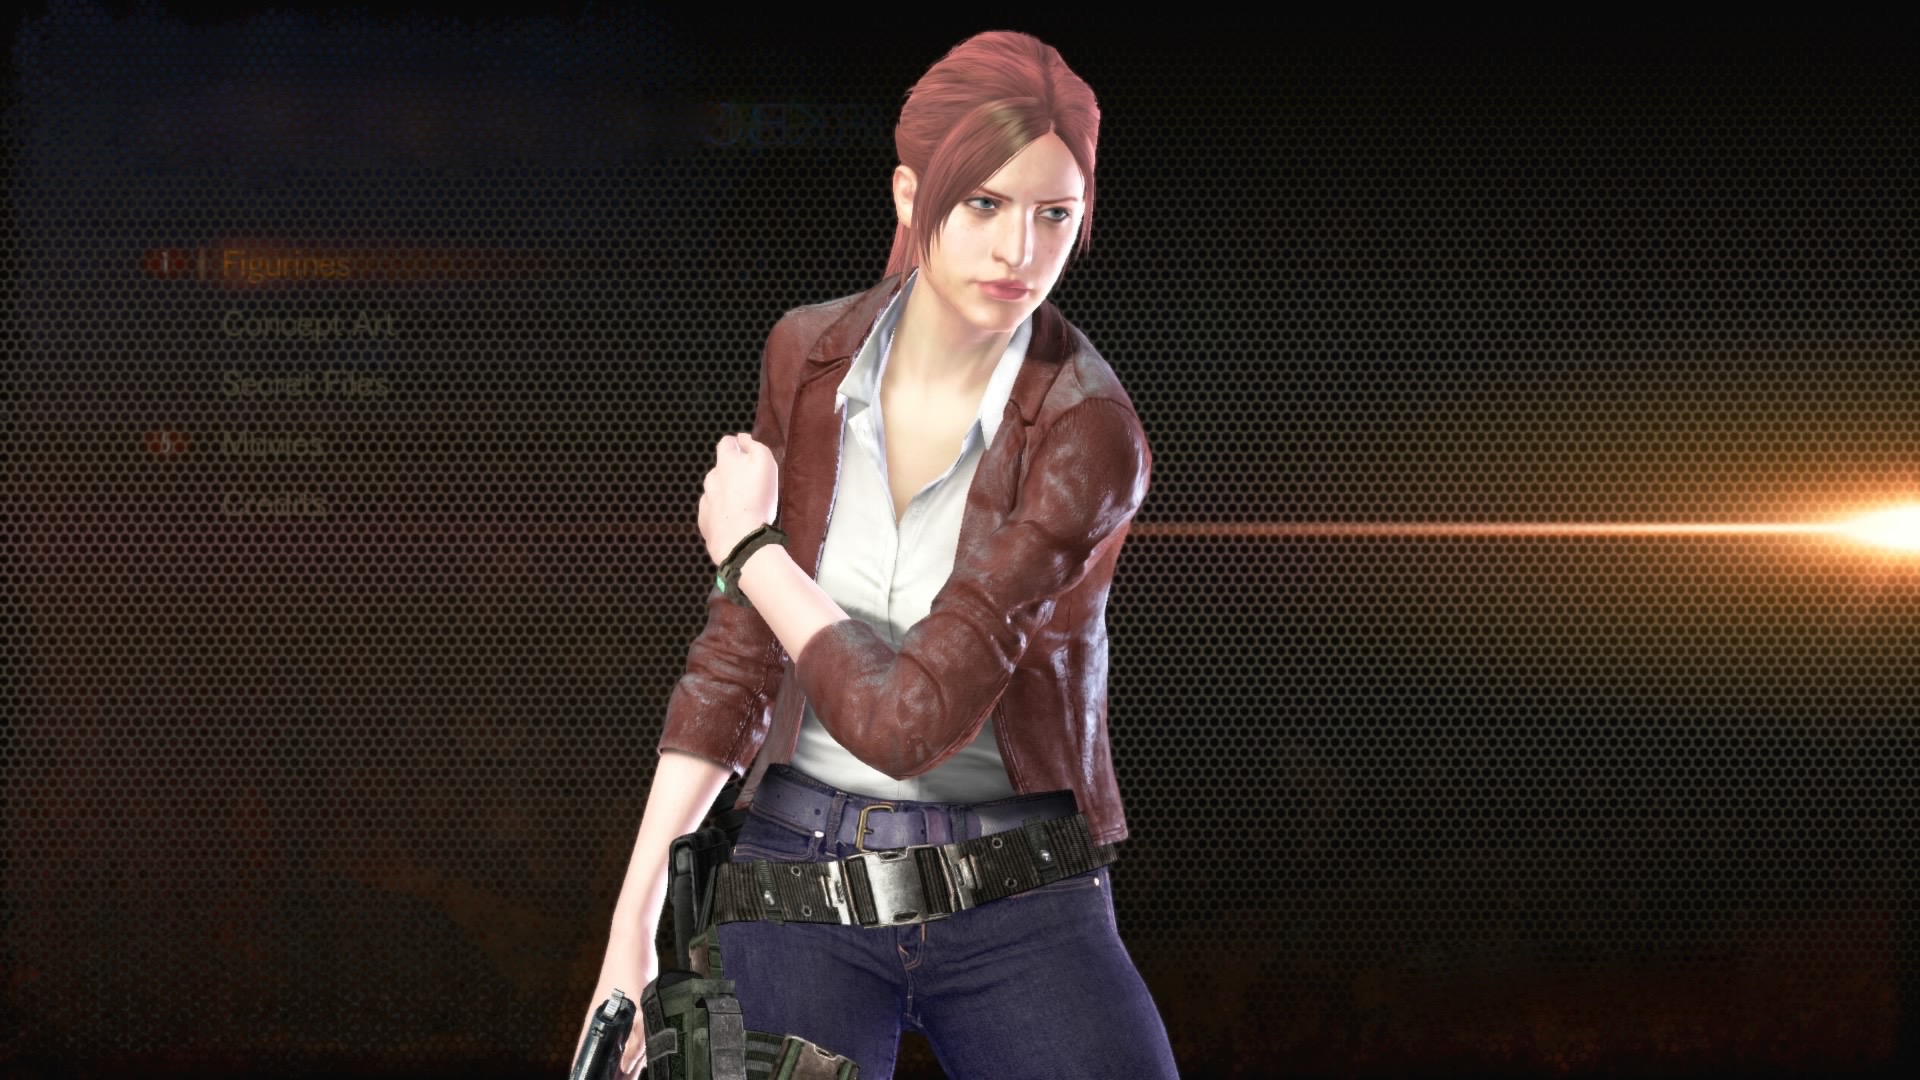 Claire Redfield (Resident Evil Revelations 2)